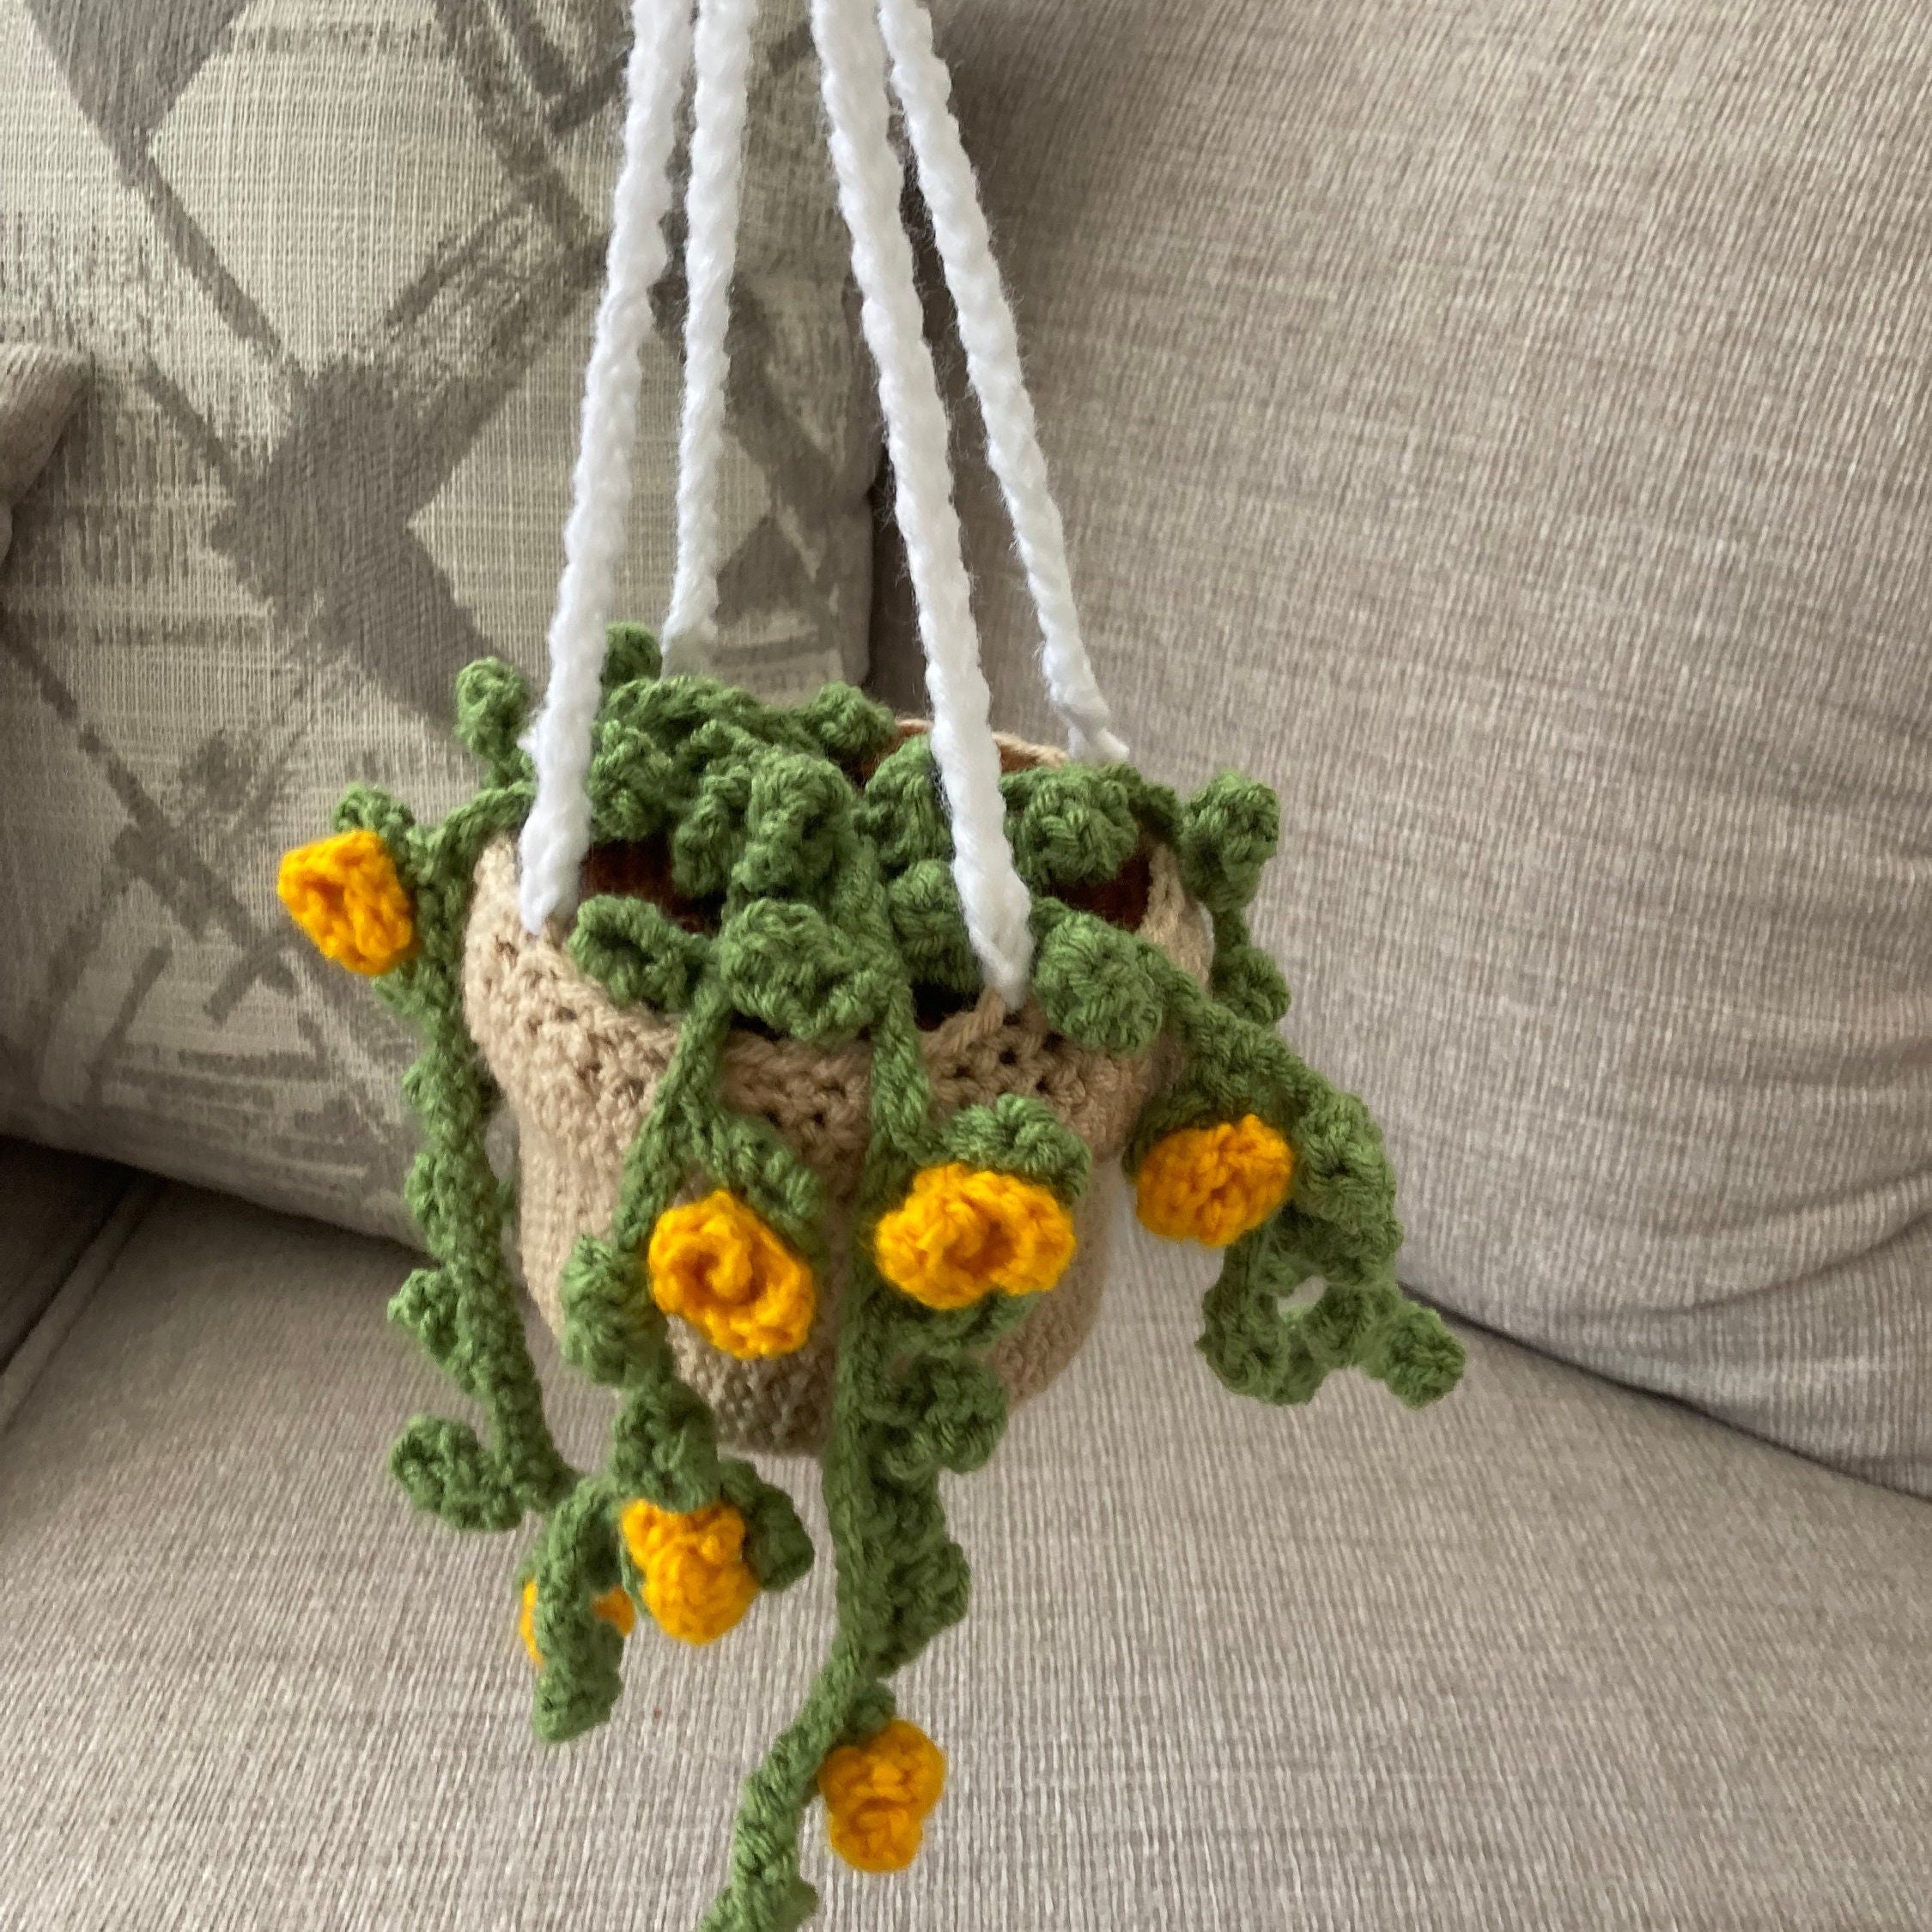 Nine unique hanging plants with: Crochet pattern